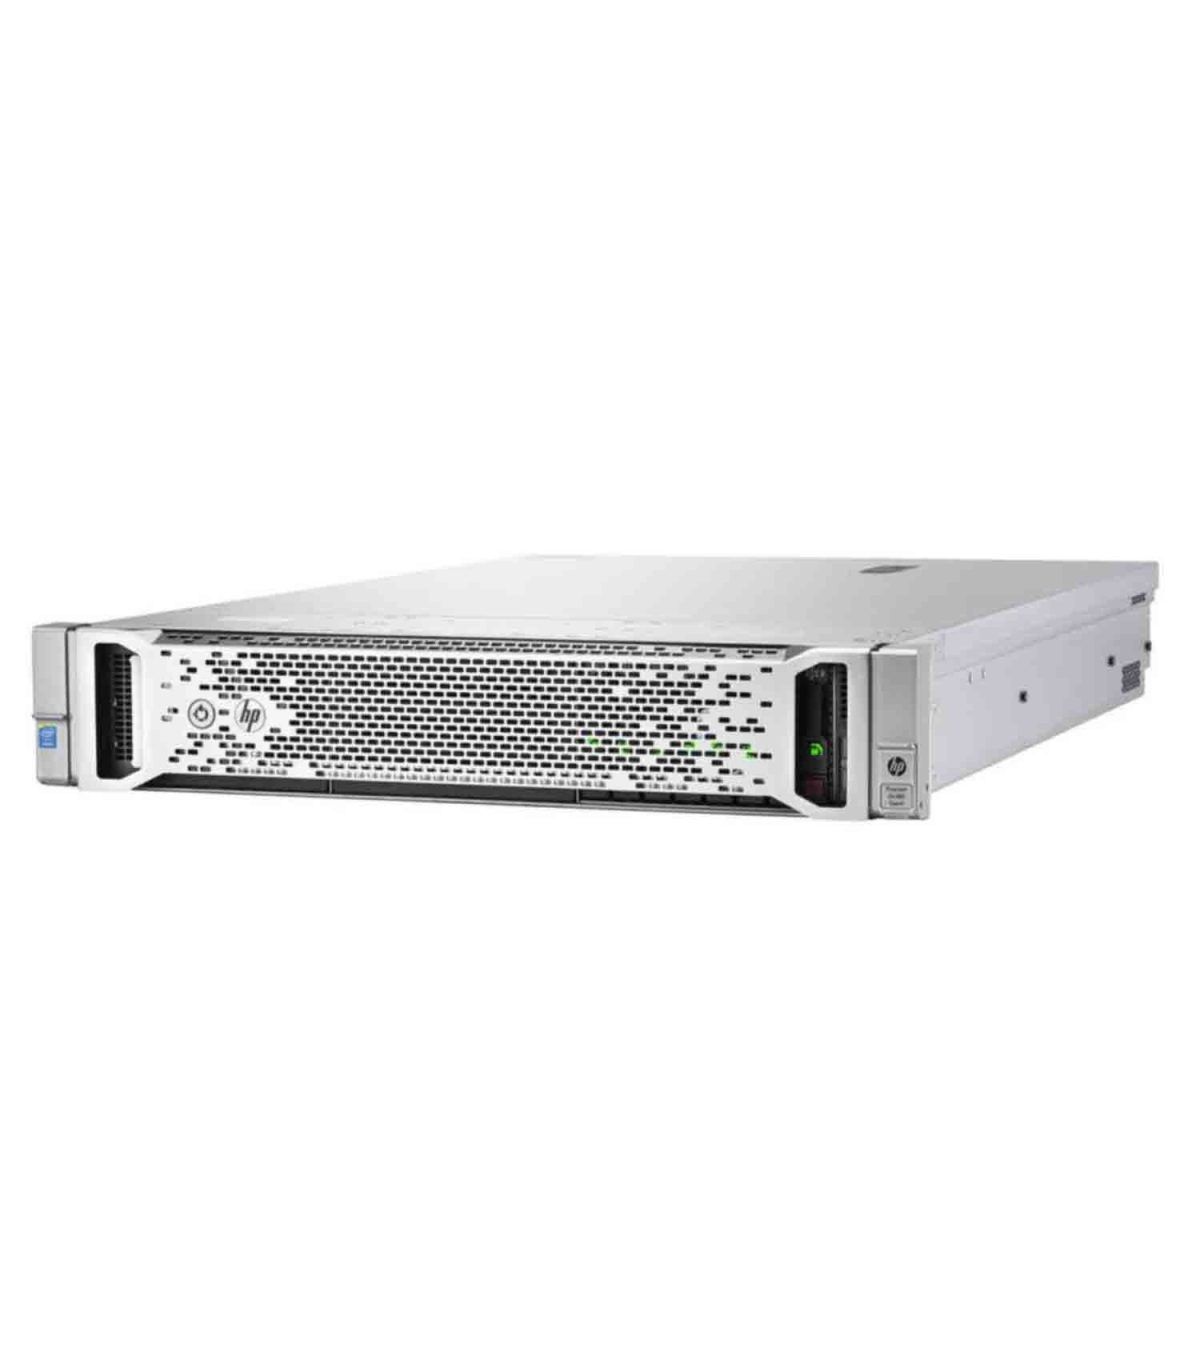 HP ProLiant DL380 Gen9 E5-2640v3 Server at an Affordable Price in Dubai